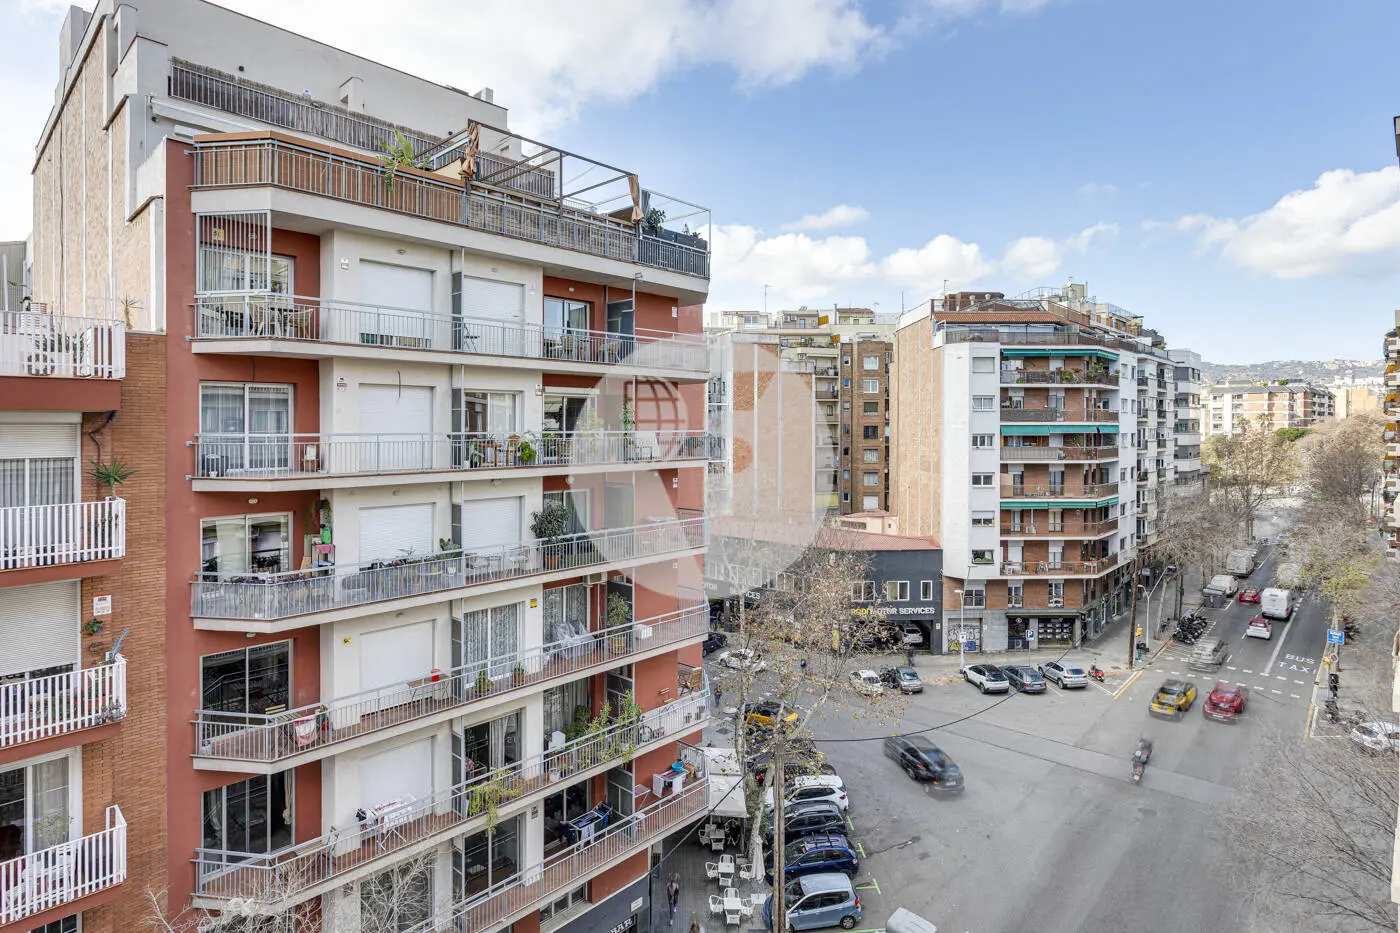 3-bedroom apartment located in the Nova Esquerra de l'Eixample neighborhood of Barcelona. 8